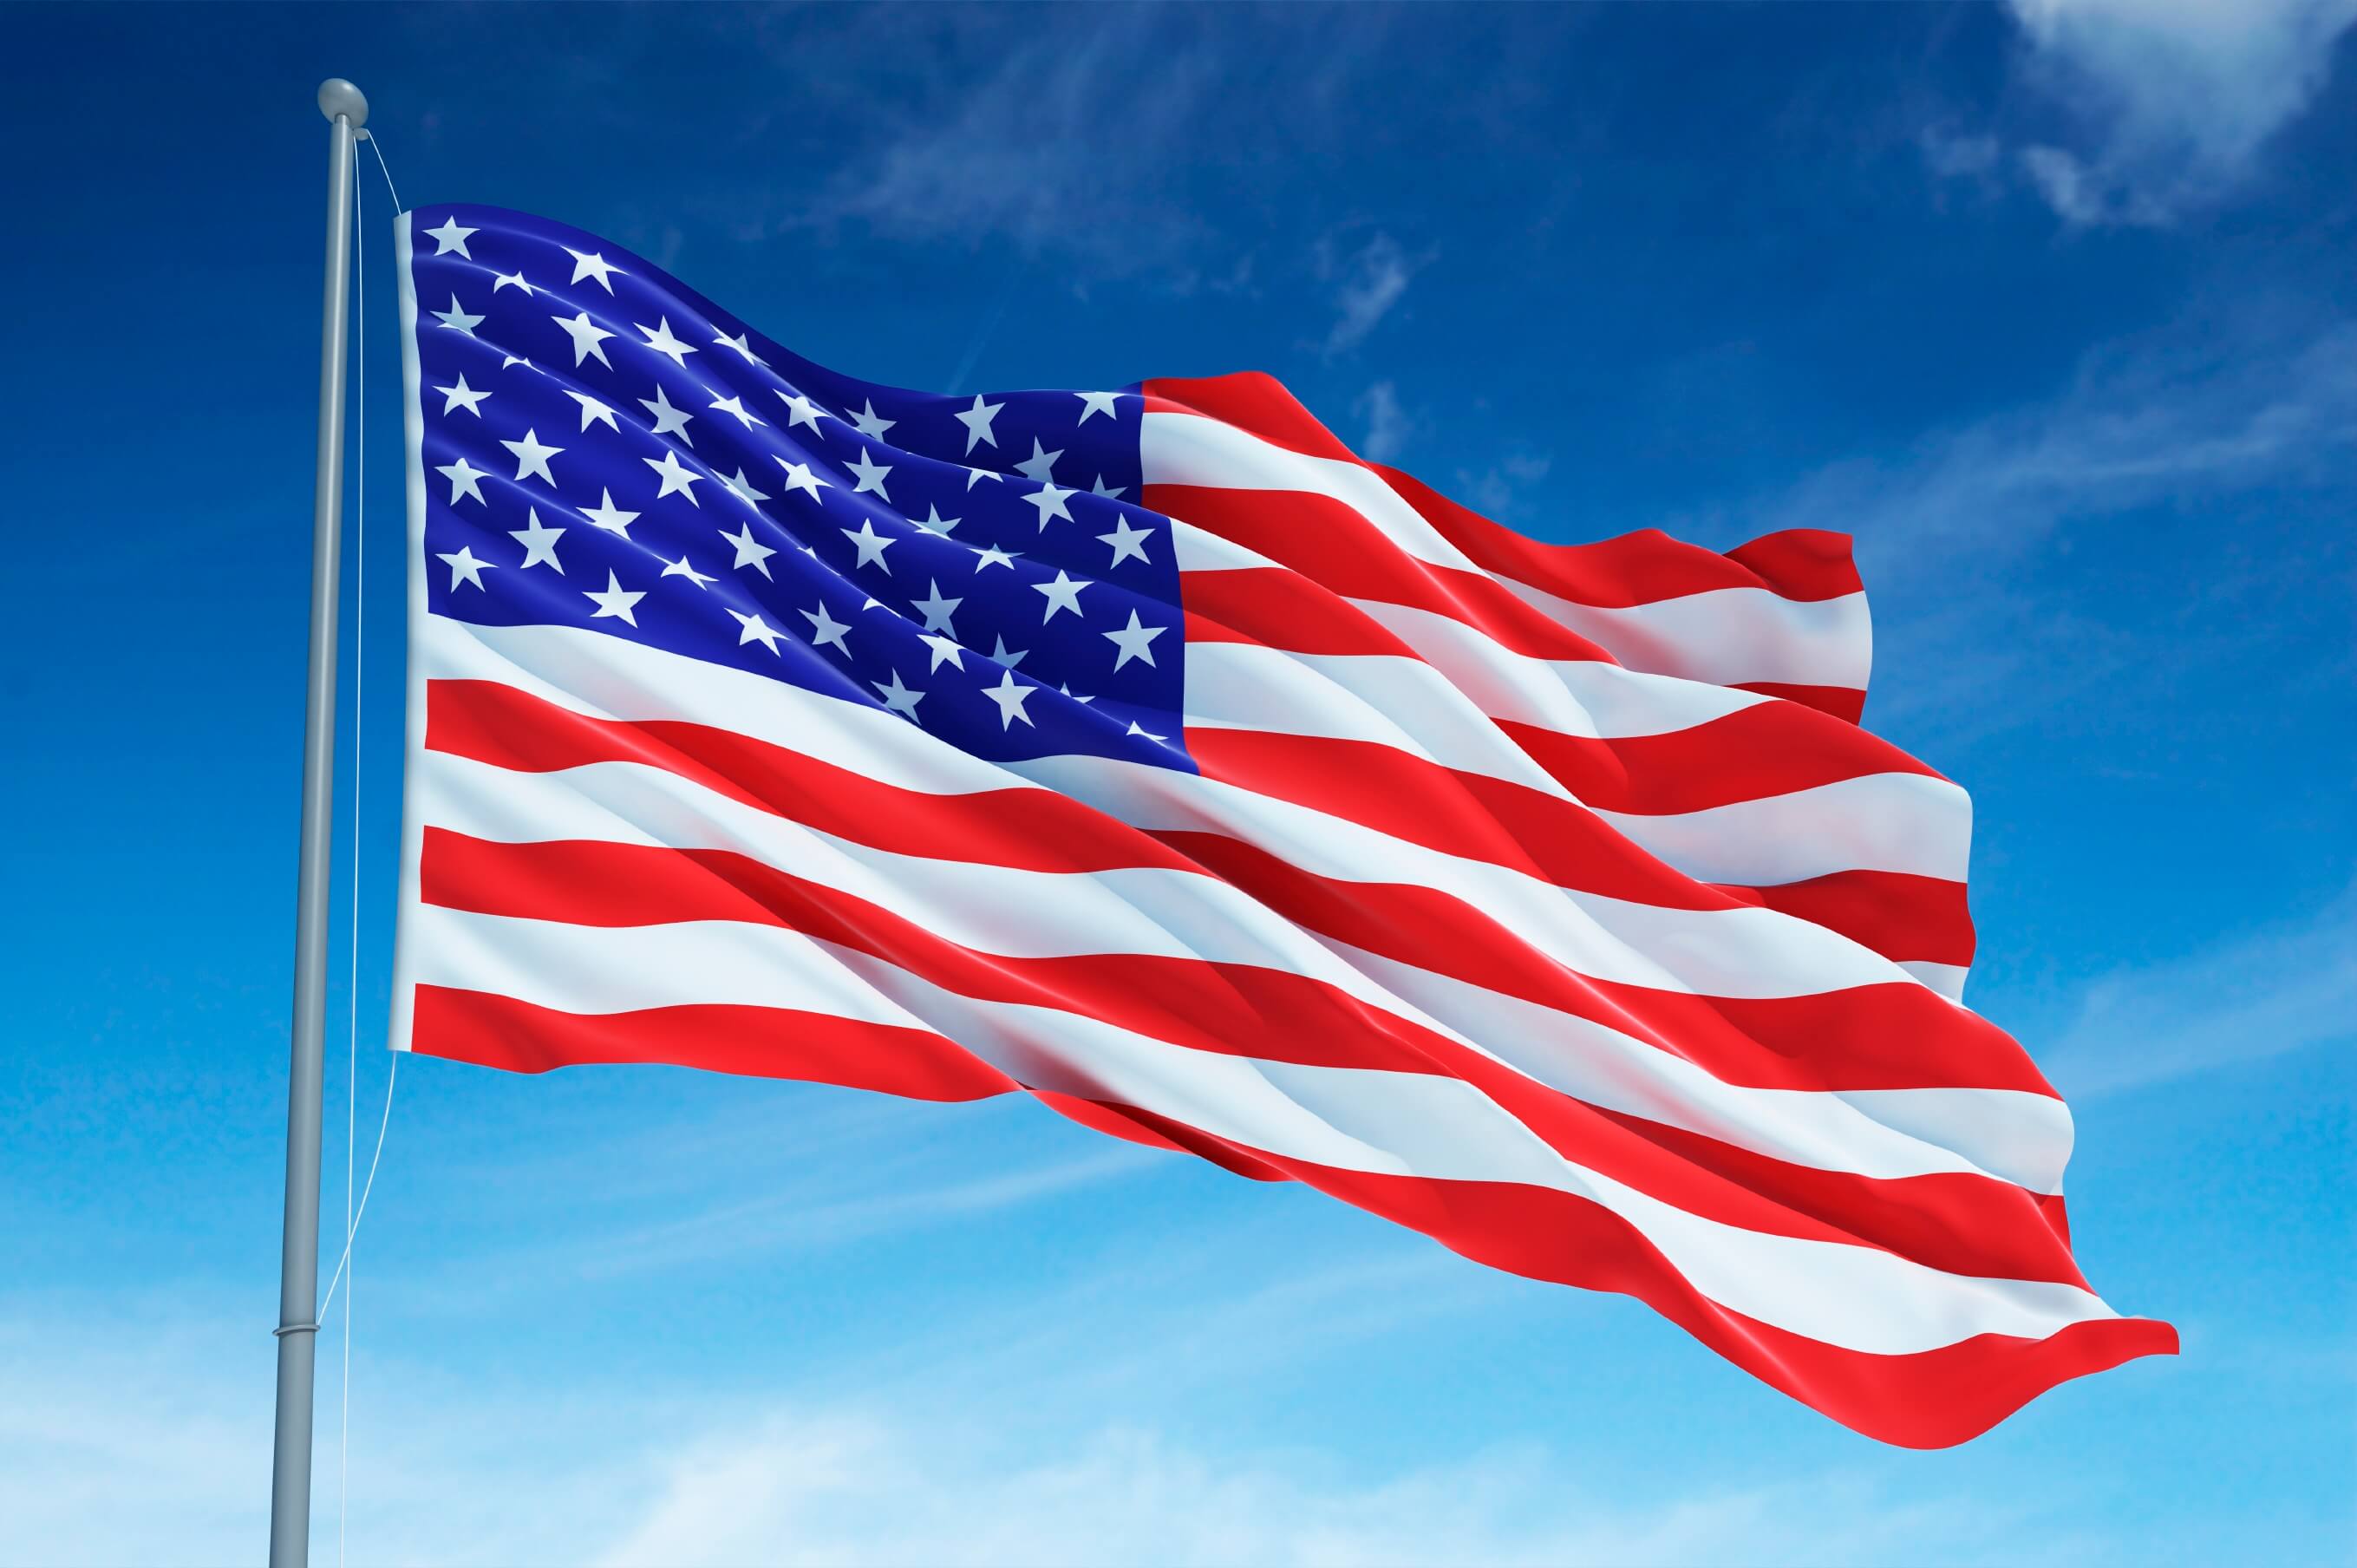 us american flag